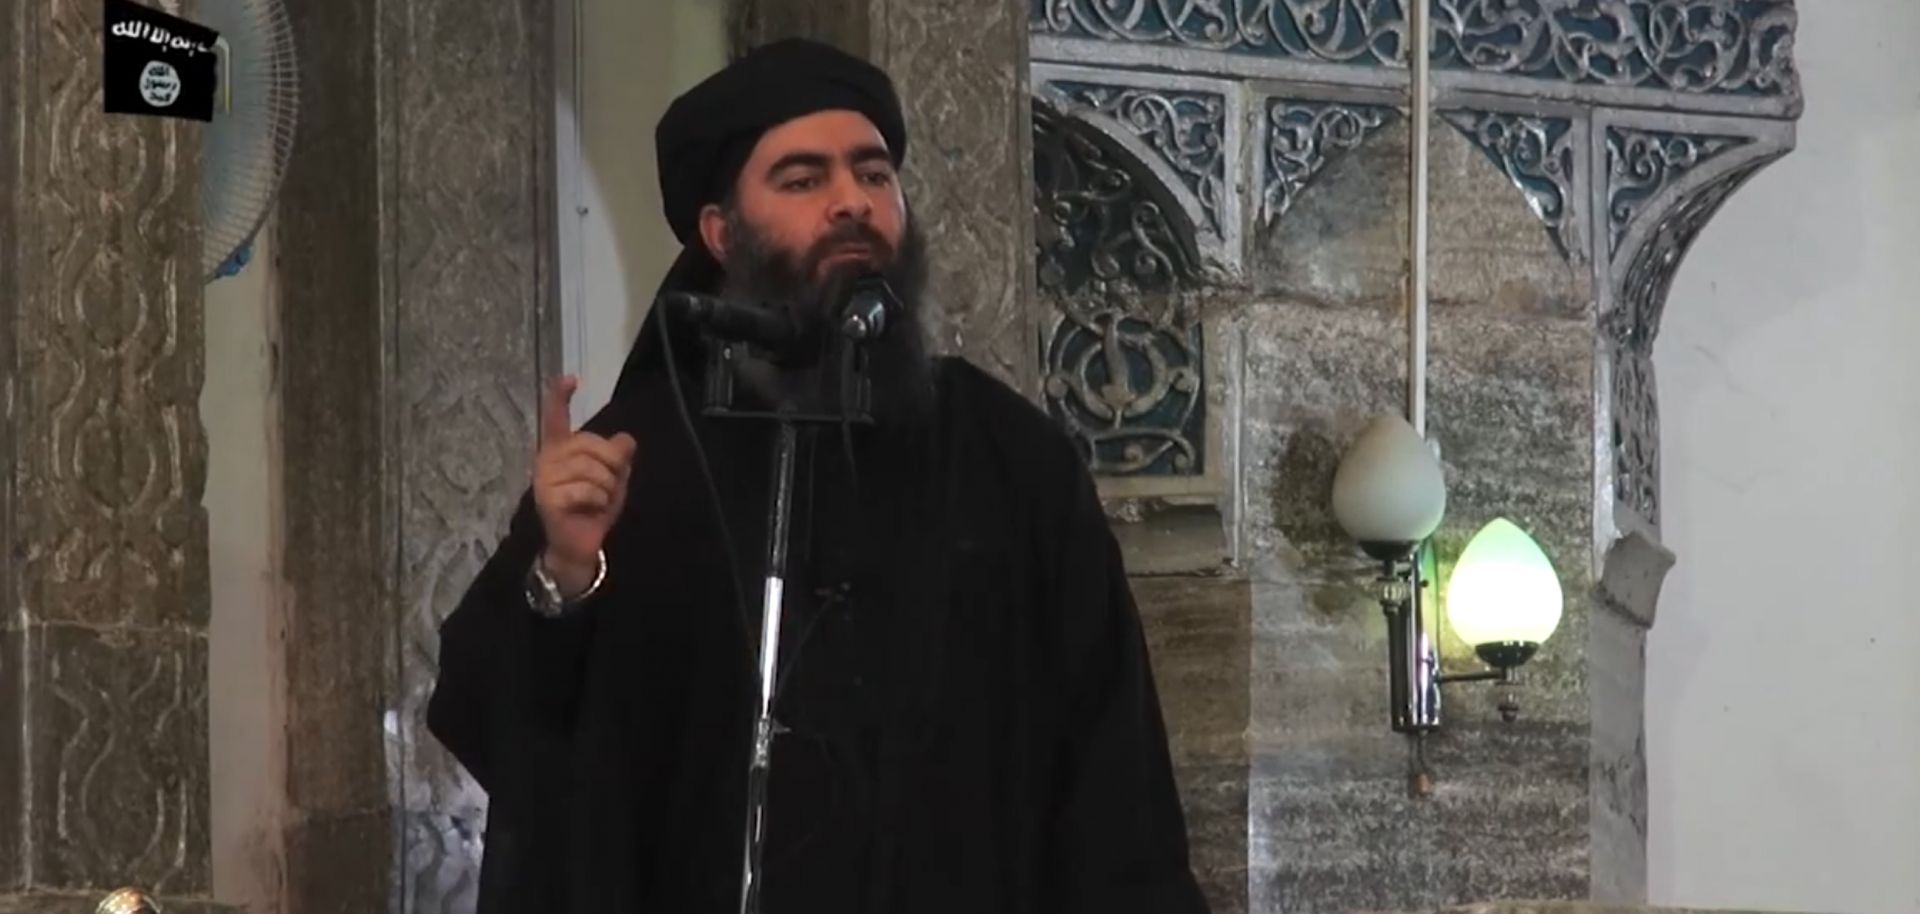 A video taken July 5, 2014, shows Abu Bakr al-Baghdadi, whom the Islamic State called Caliph Ibrihim.